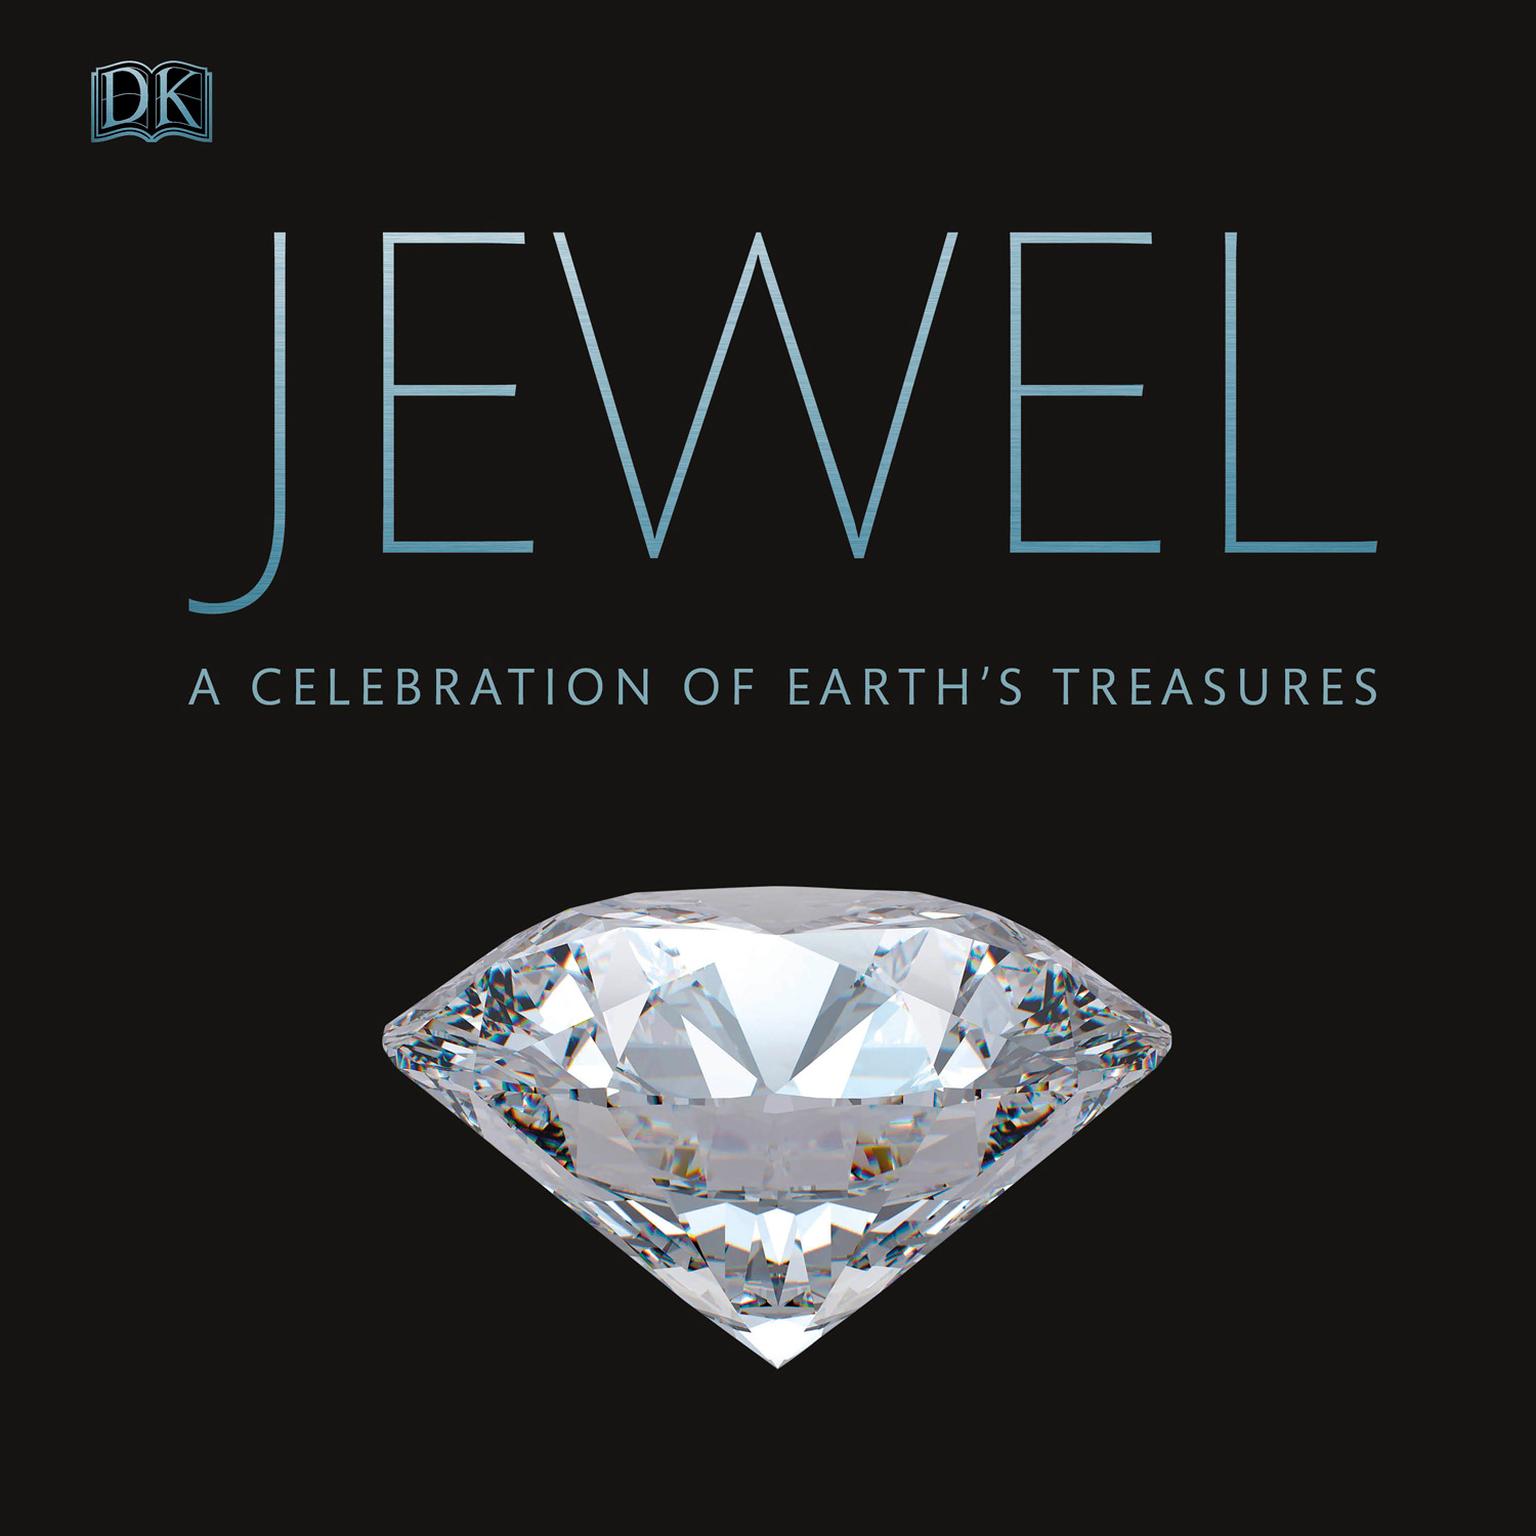 Jewel: A Celebration of Earth’s Treasures